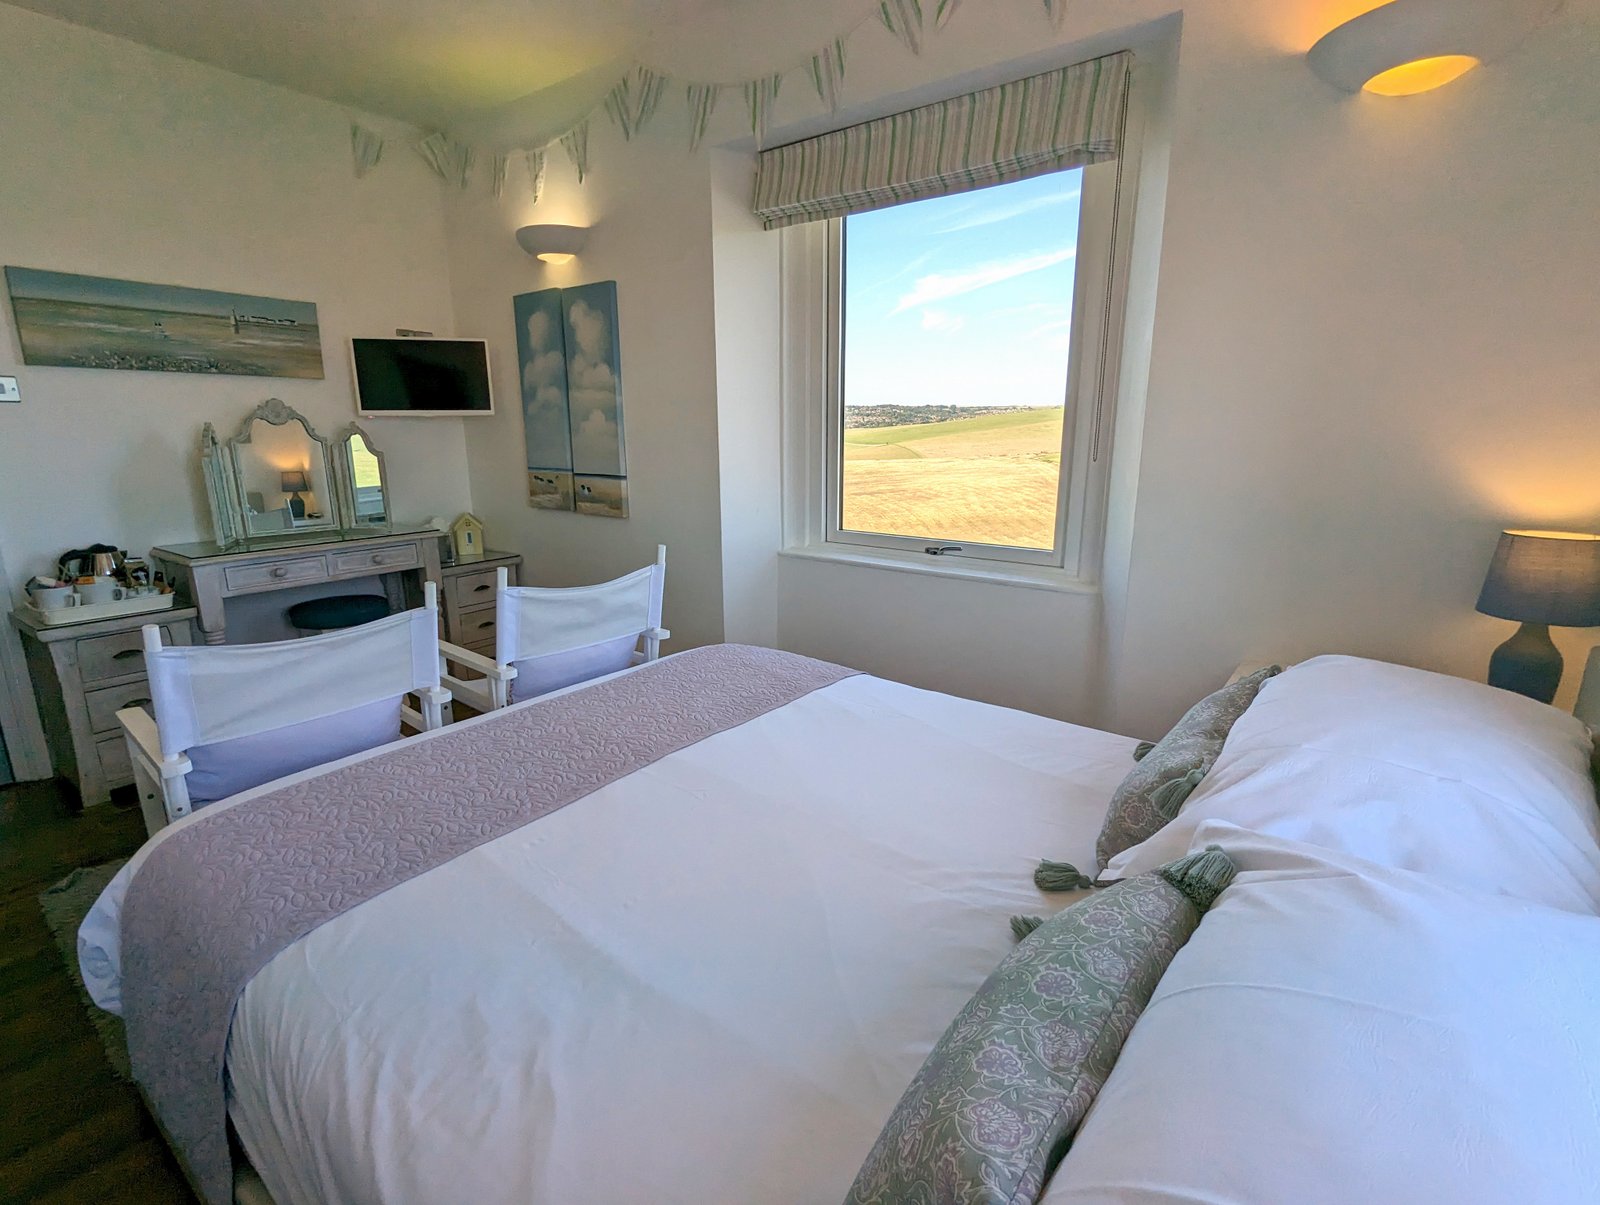 Hotel Room at Beachy Head, Eastbourne, Beach Hut